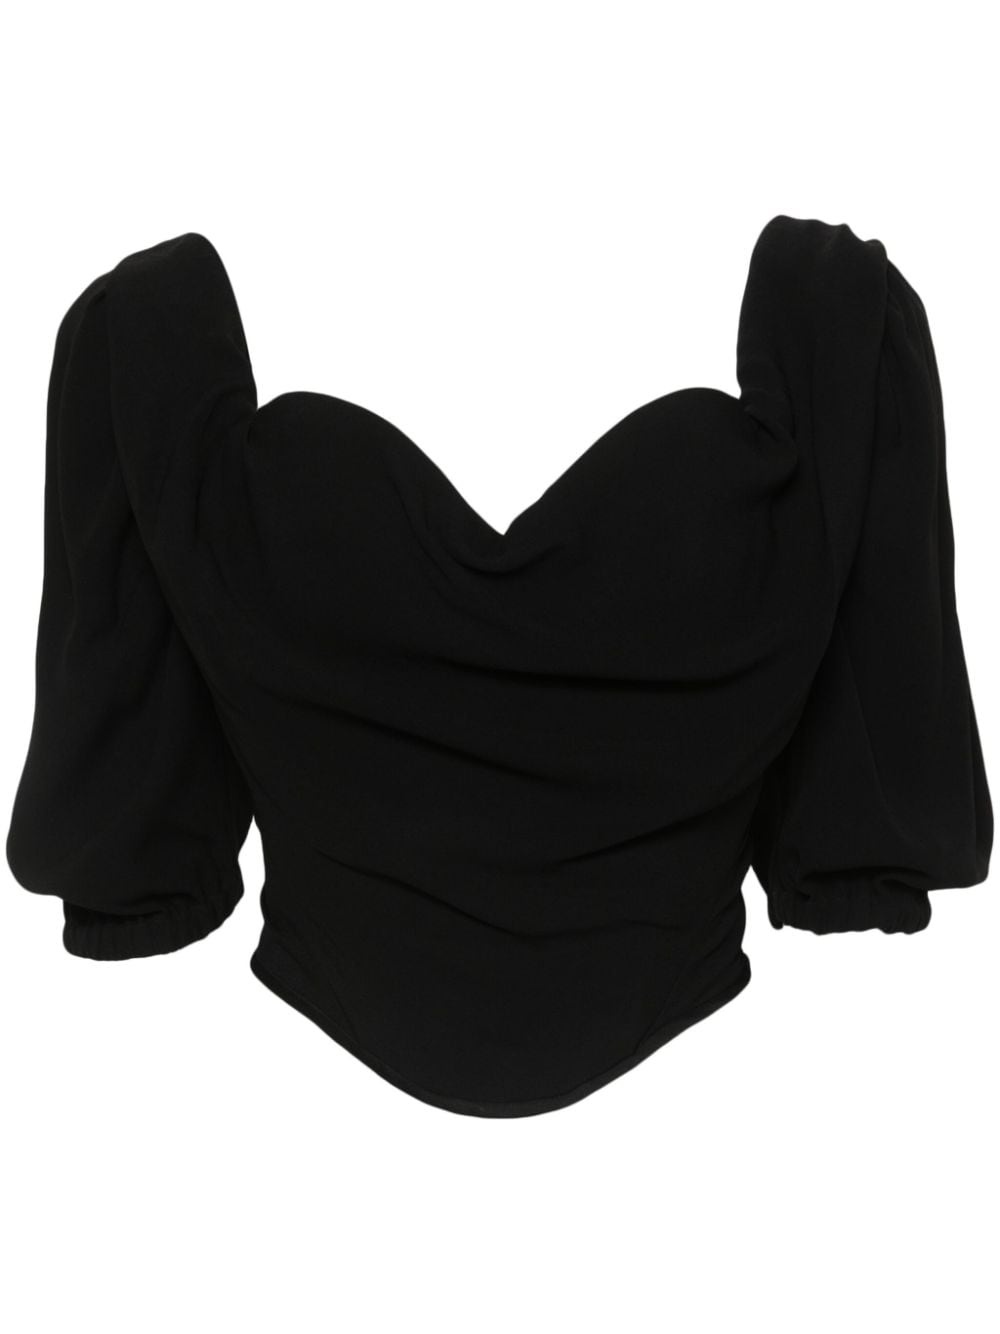 Orb-plaque crepe corset top - 1